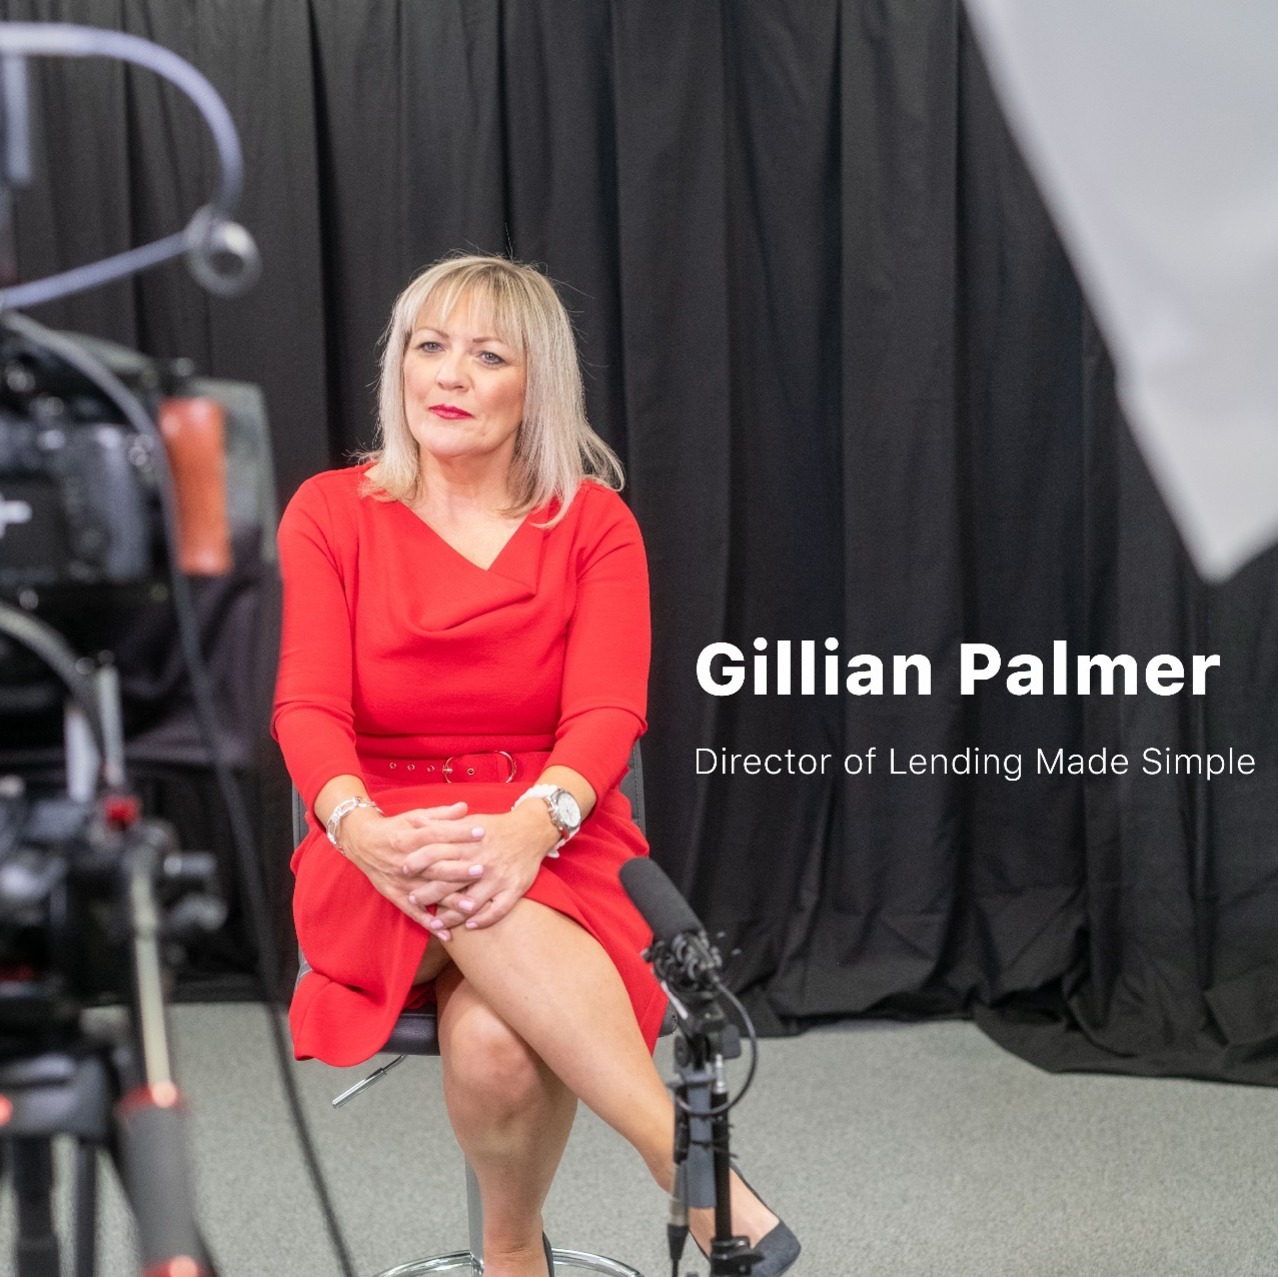 Gillian Palmer